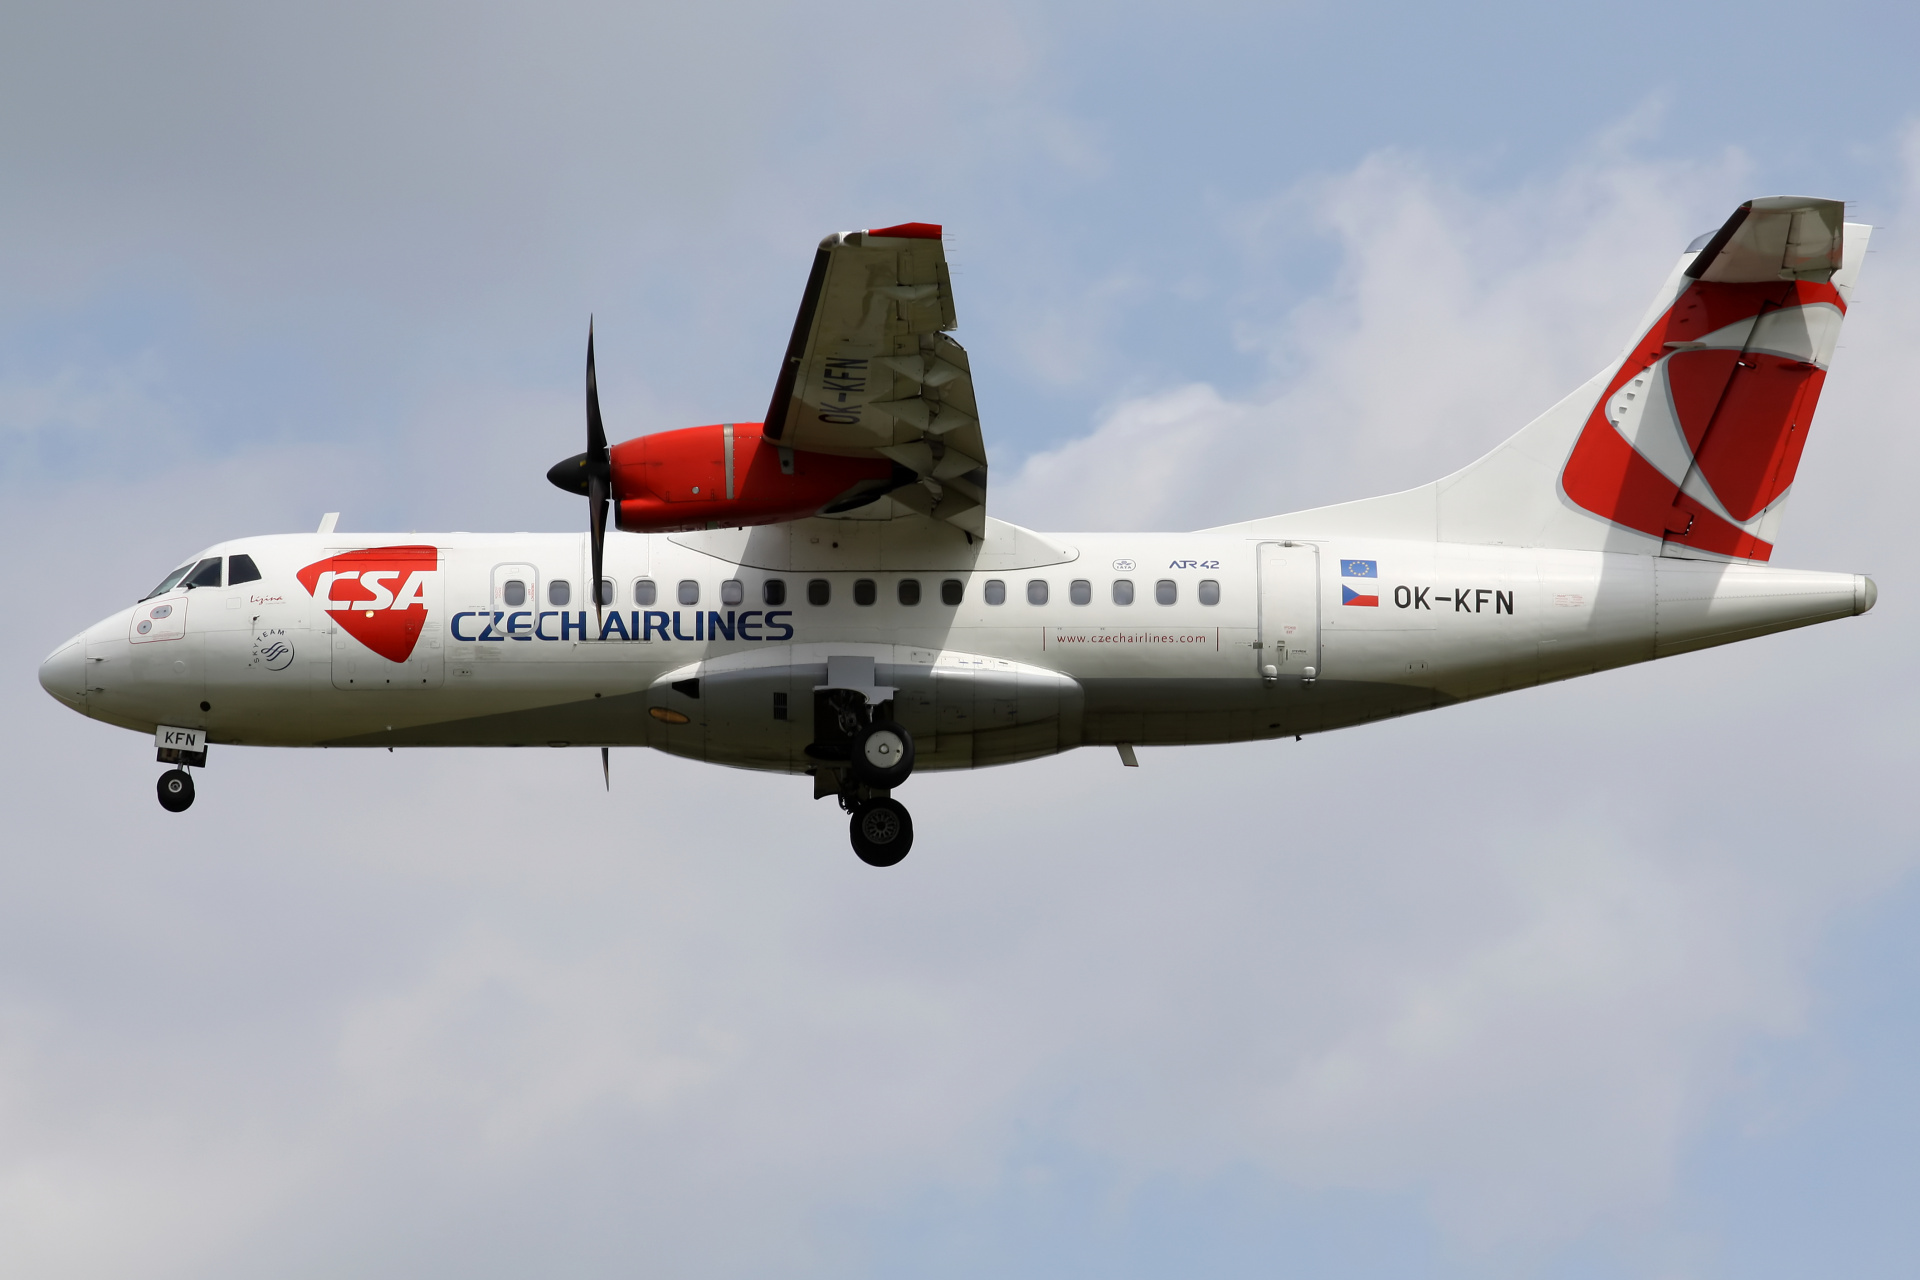 OK-KFN (Aircraft » EPWA Spotting » ATR 42 » CSA Czech Airlines)